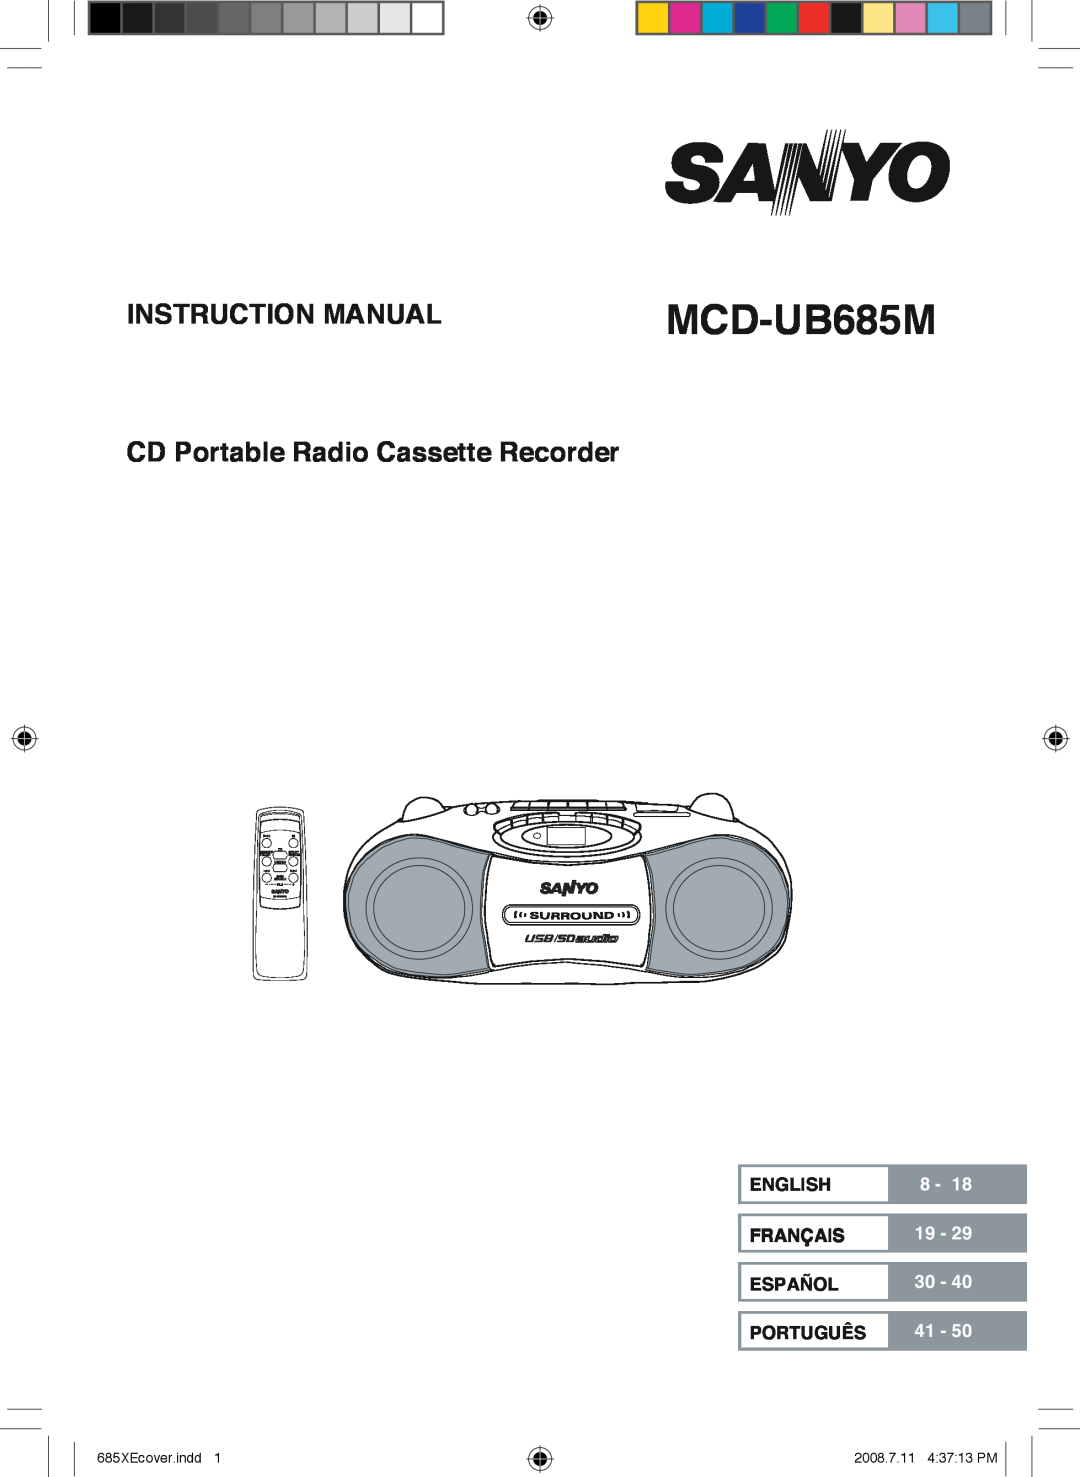 Sanyo MCD-UB685M instruction manual CD Portable Radio Cassette Recorder, English, Français, Español, Português 